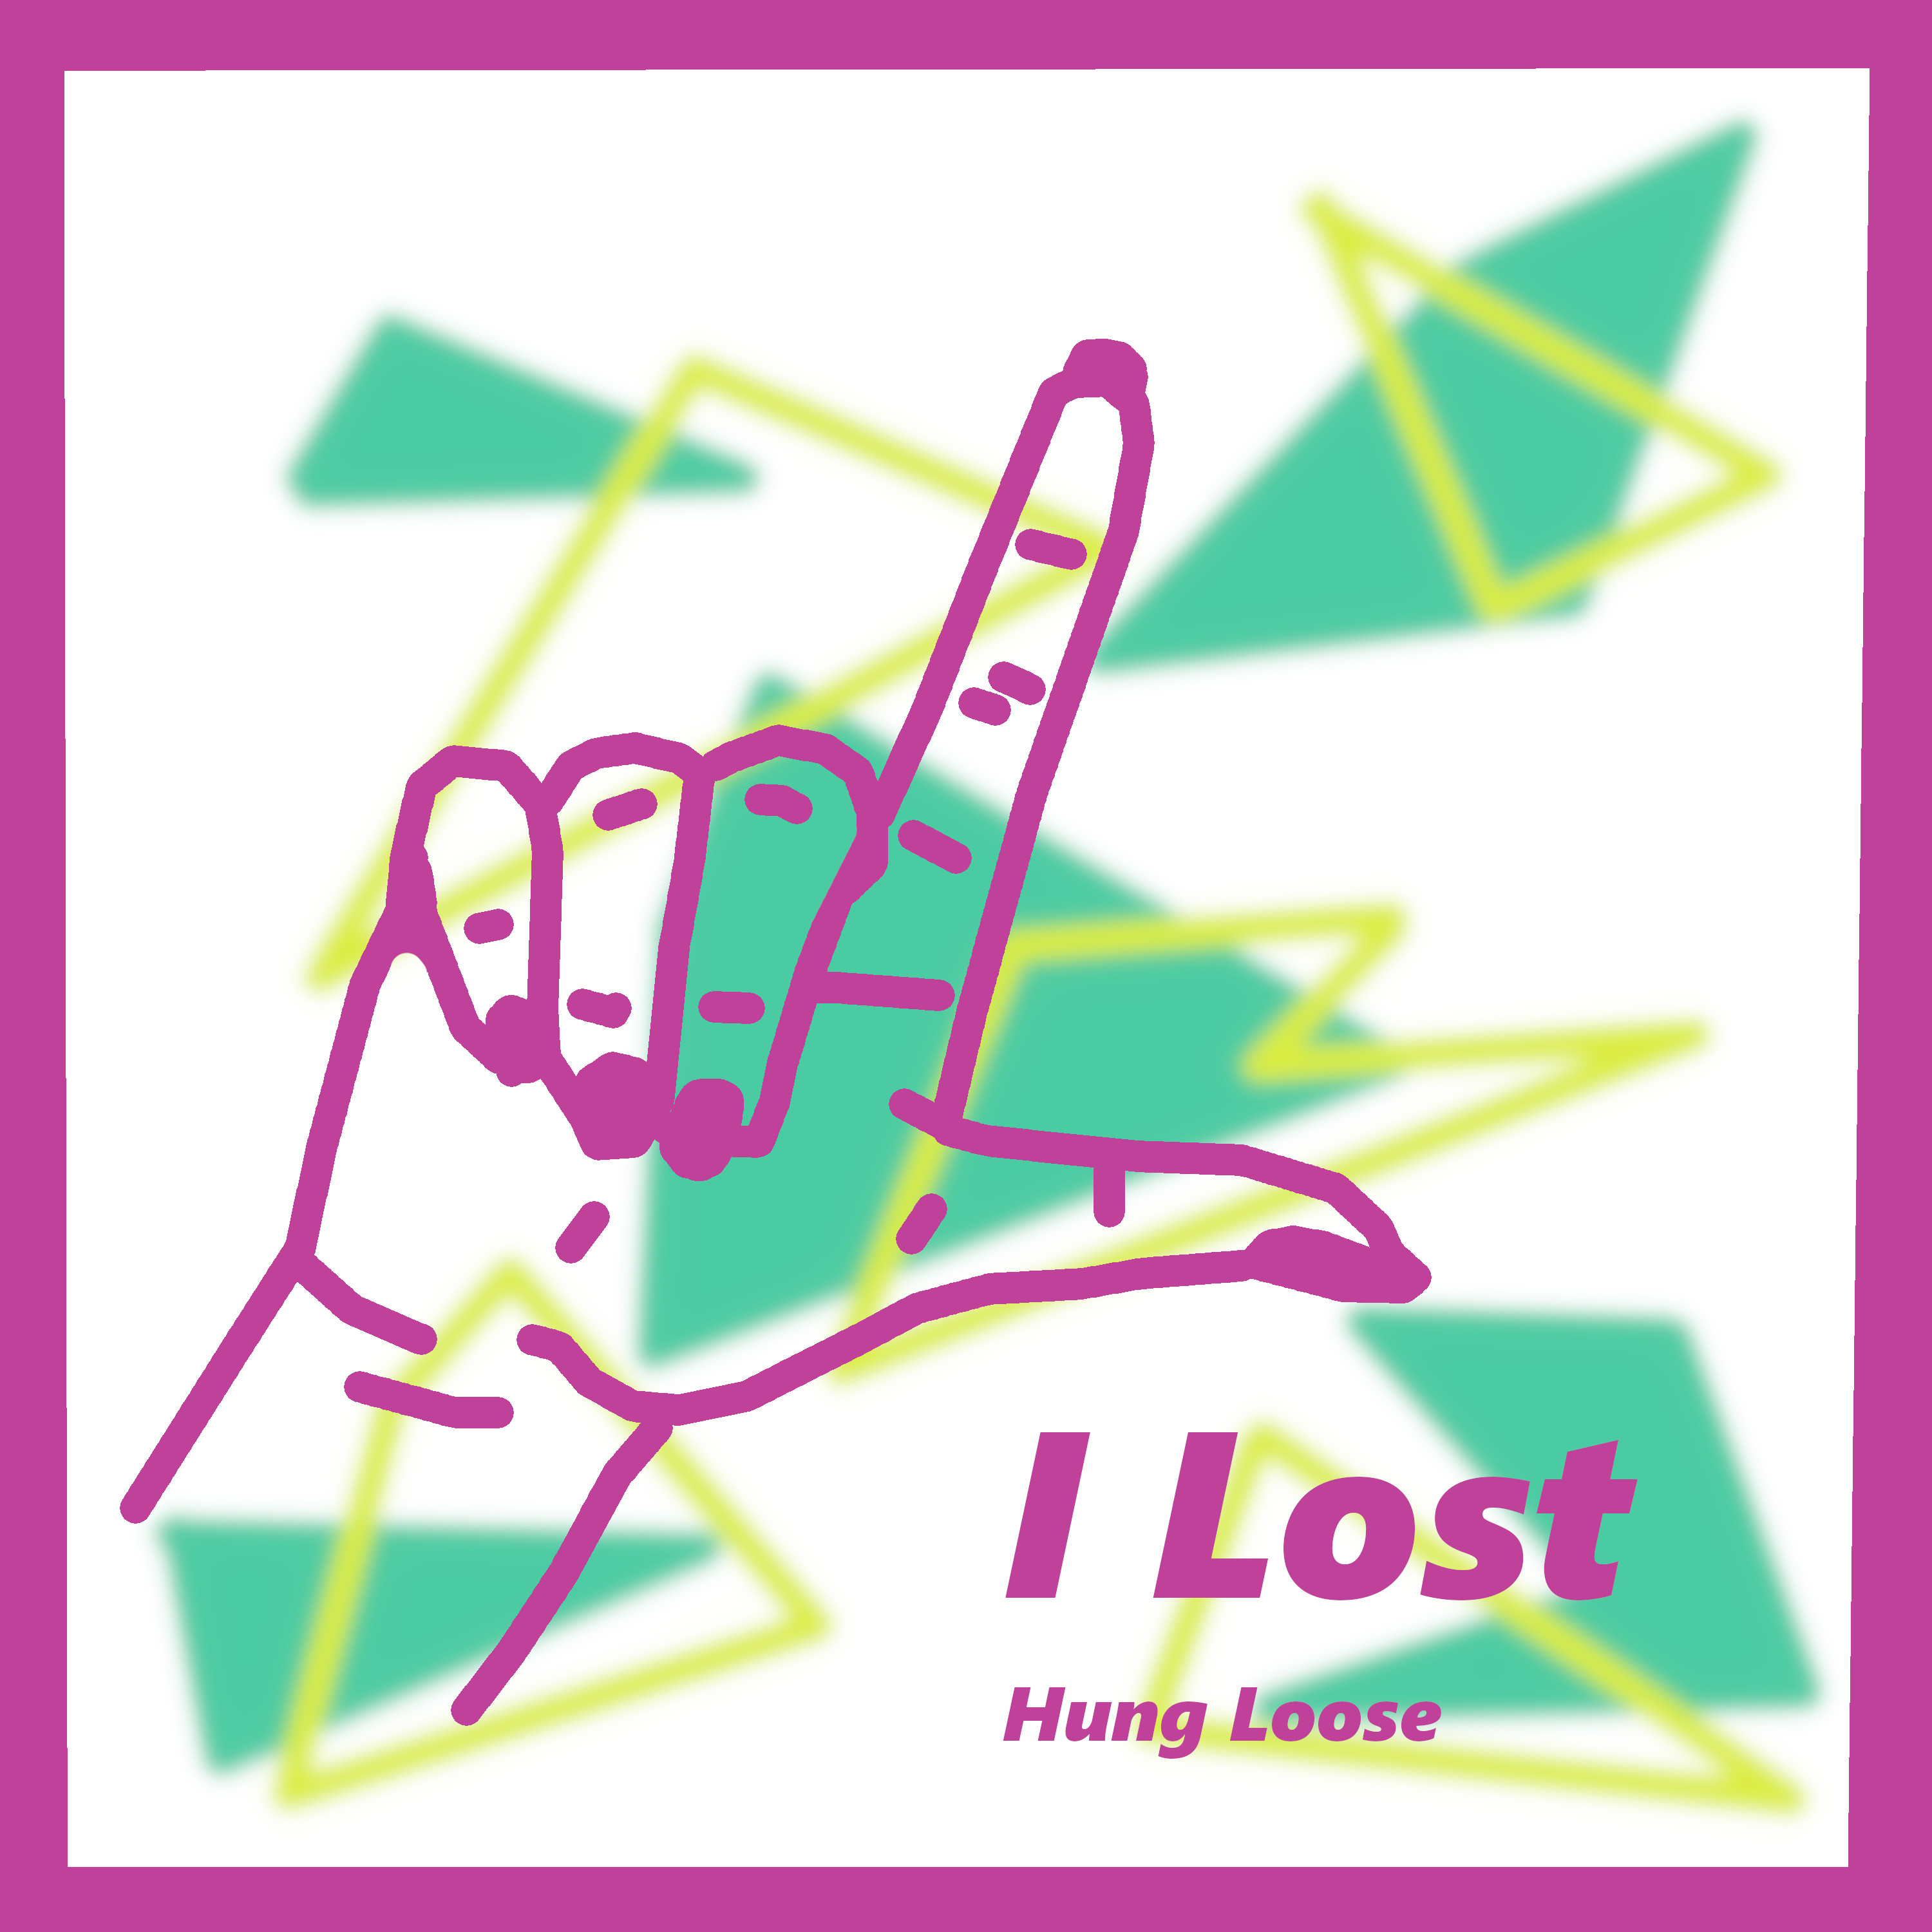 Hung Loose